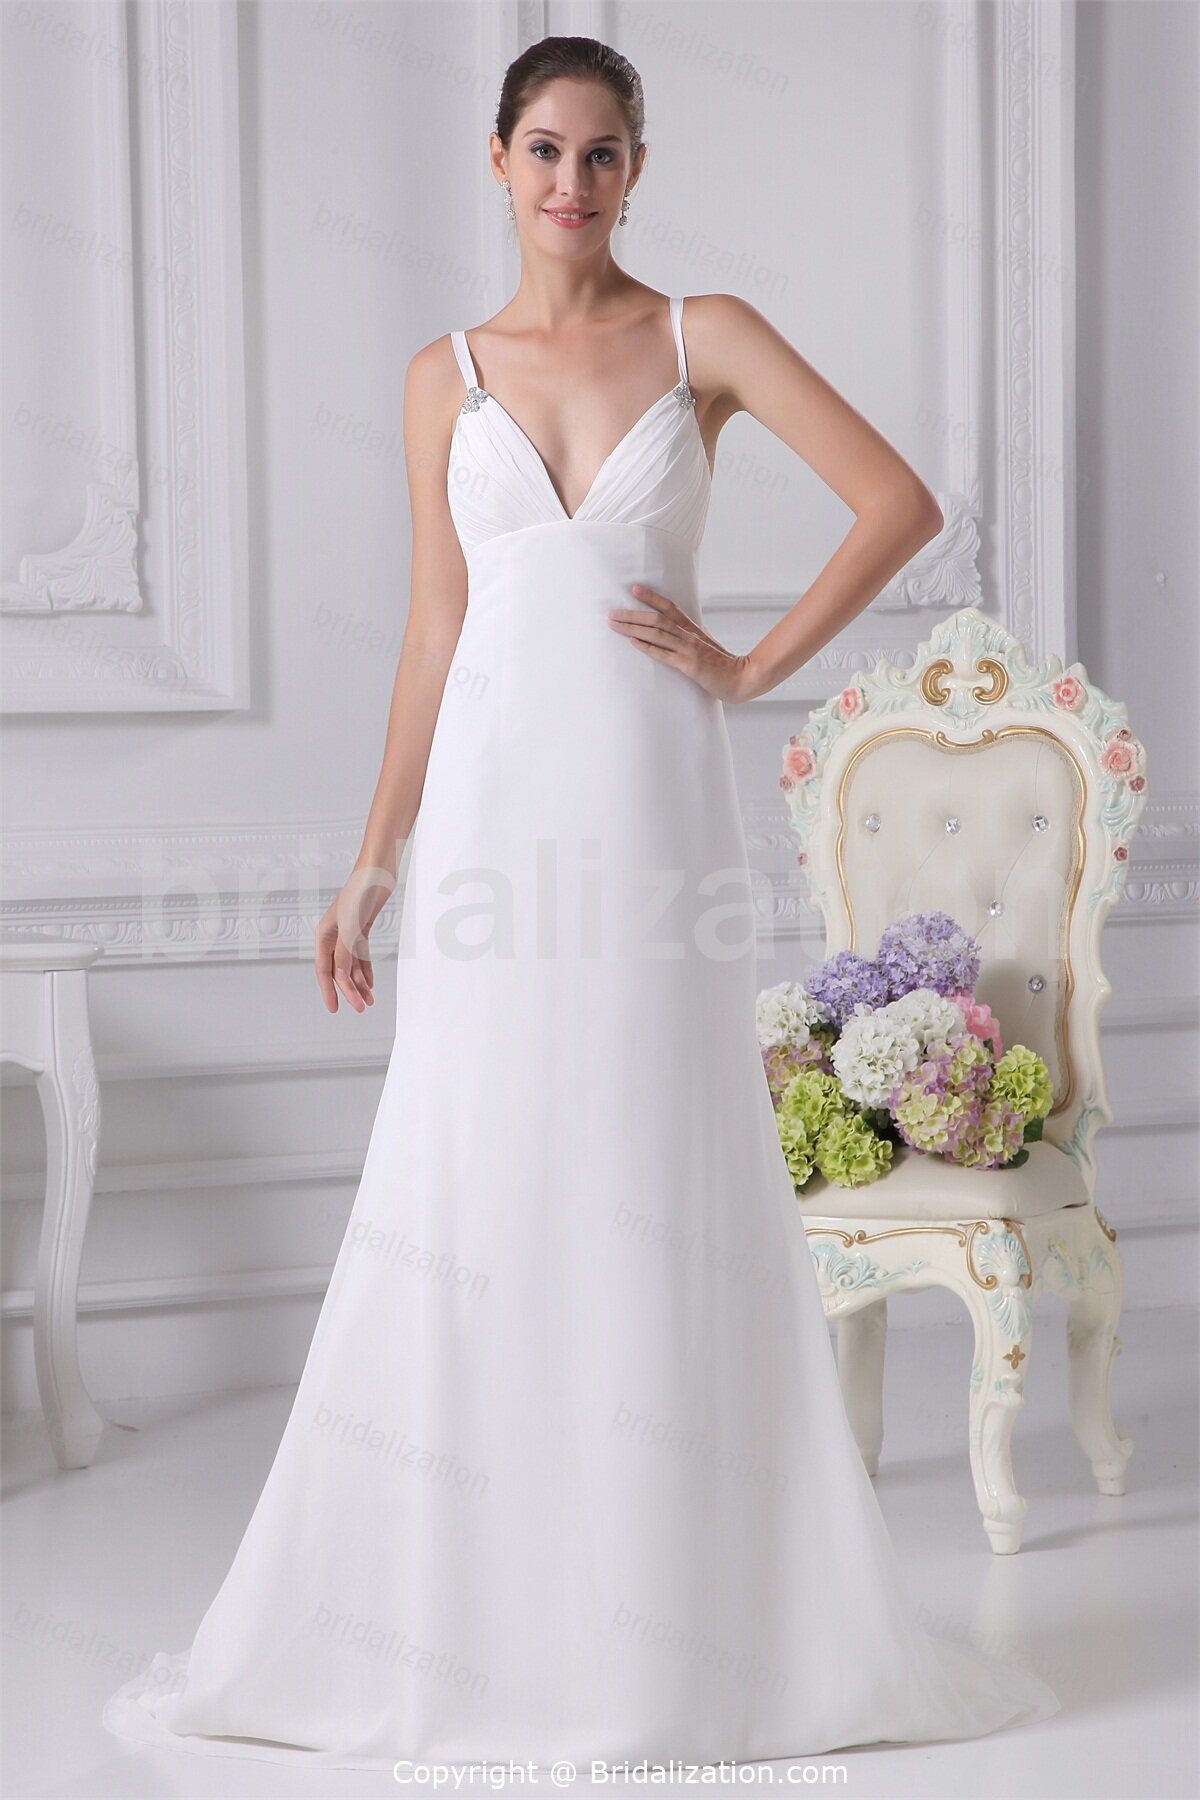 Wedding dresses with straps Photo - 11